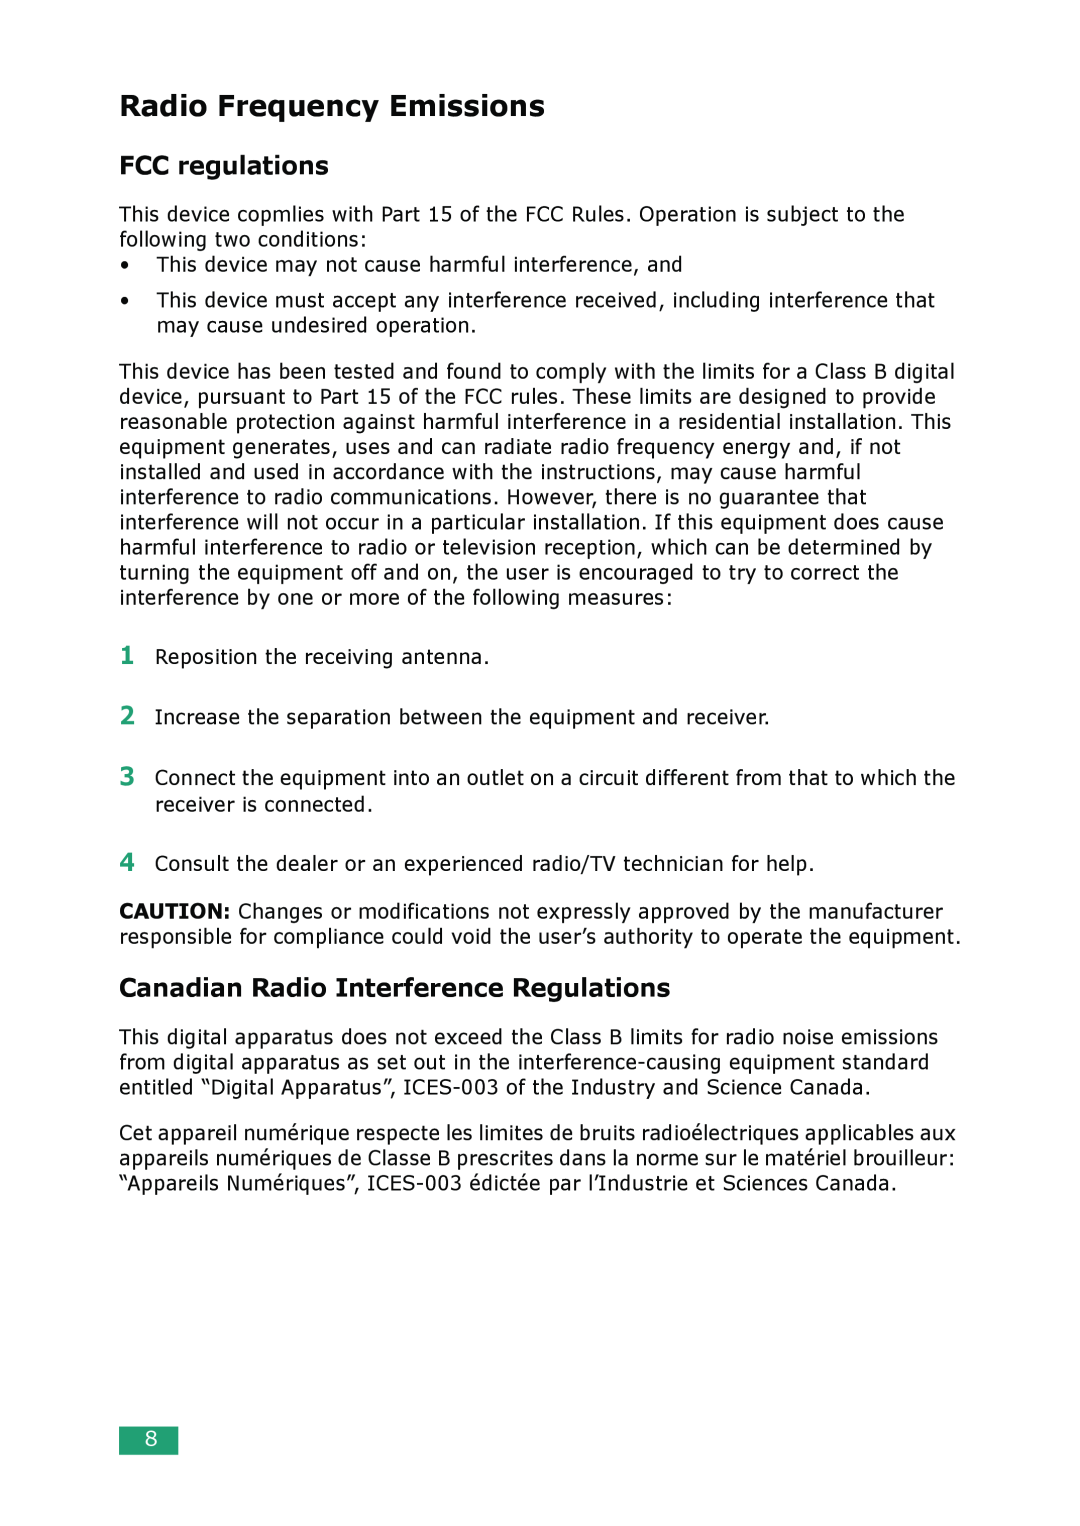 Samsung ML-1610 manual Radio Frequency Emissions, FCC regulations, Canadian Radio Interference Regulations 